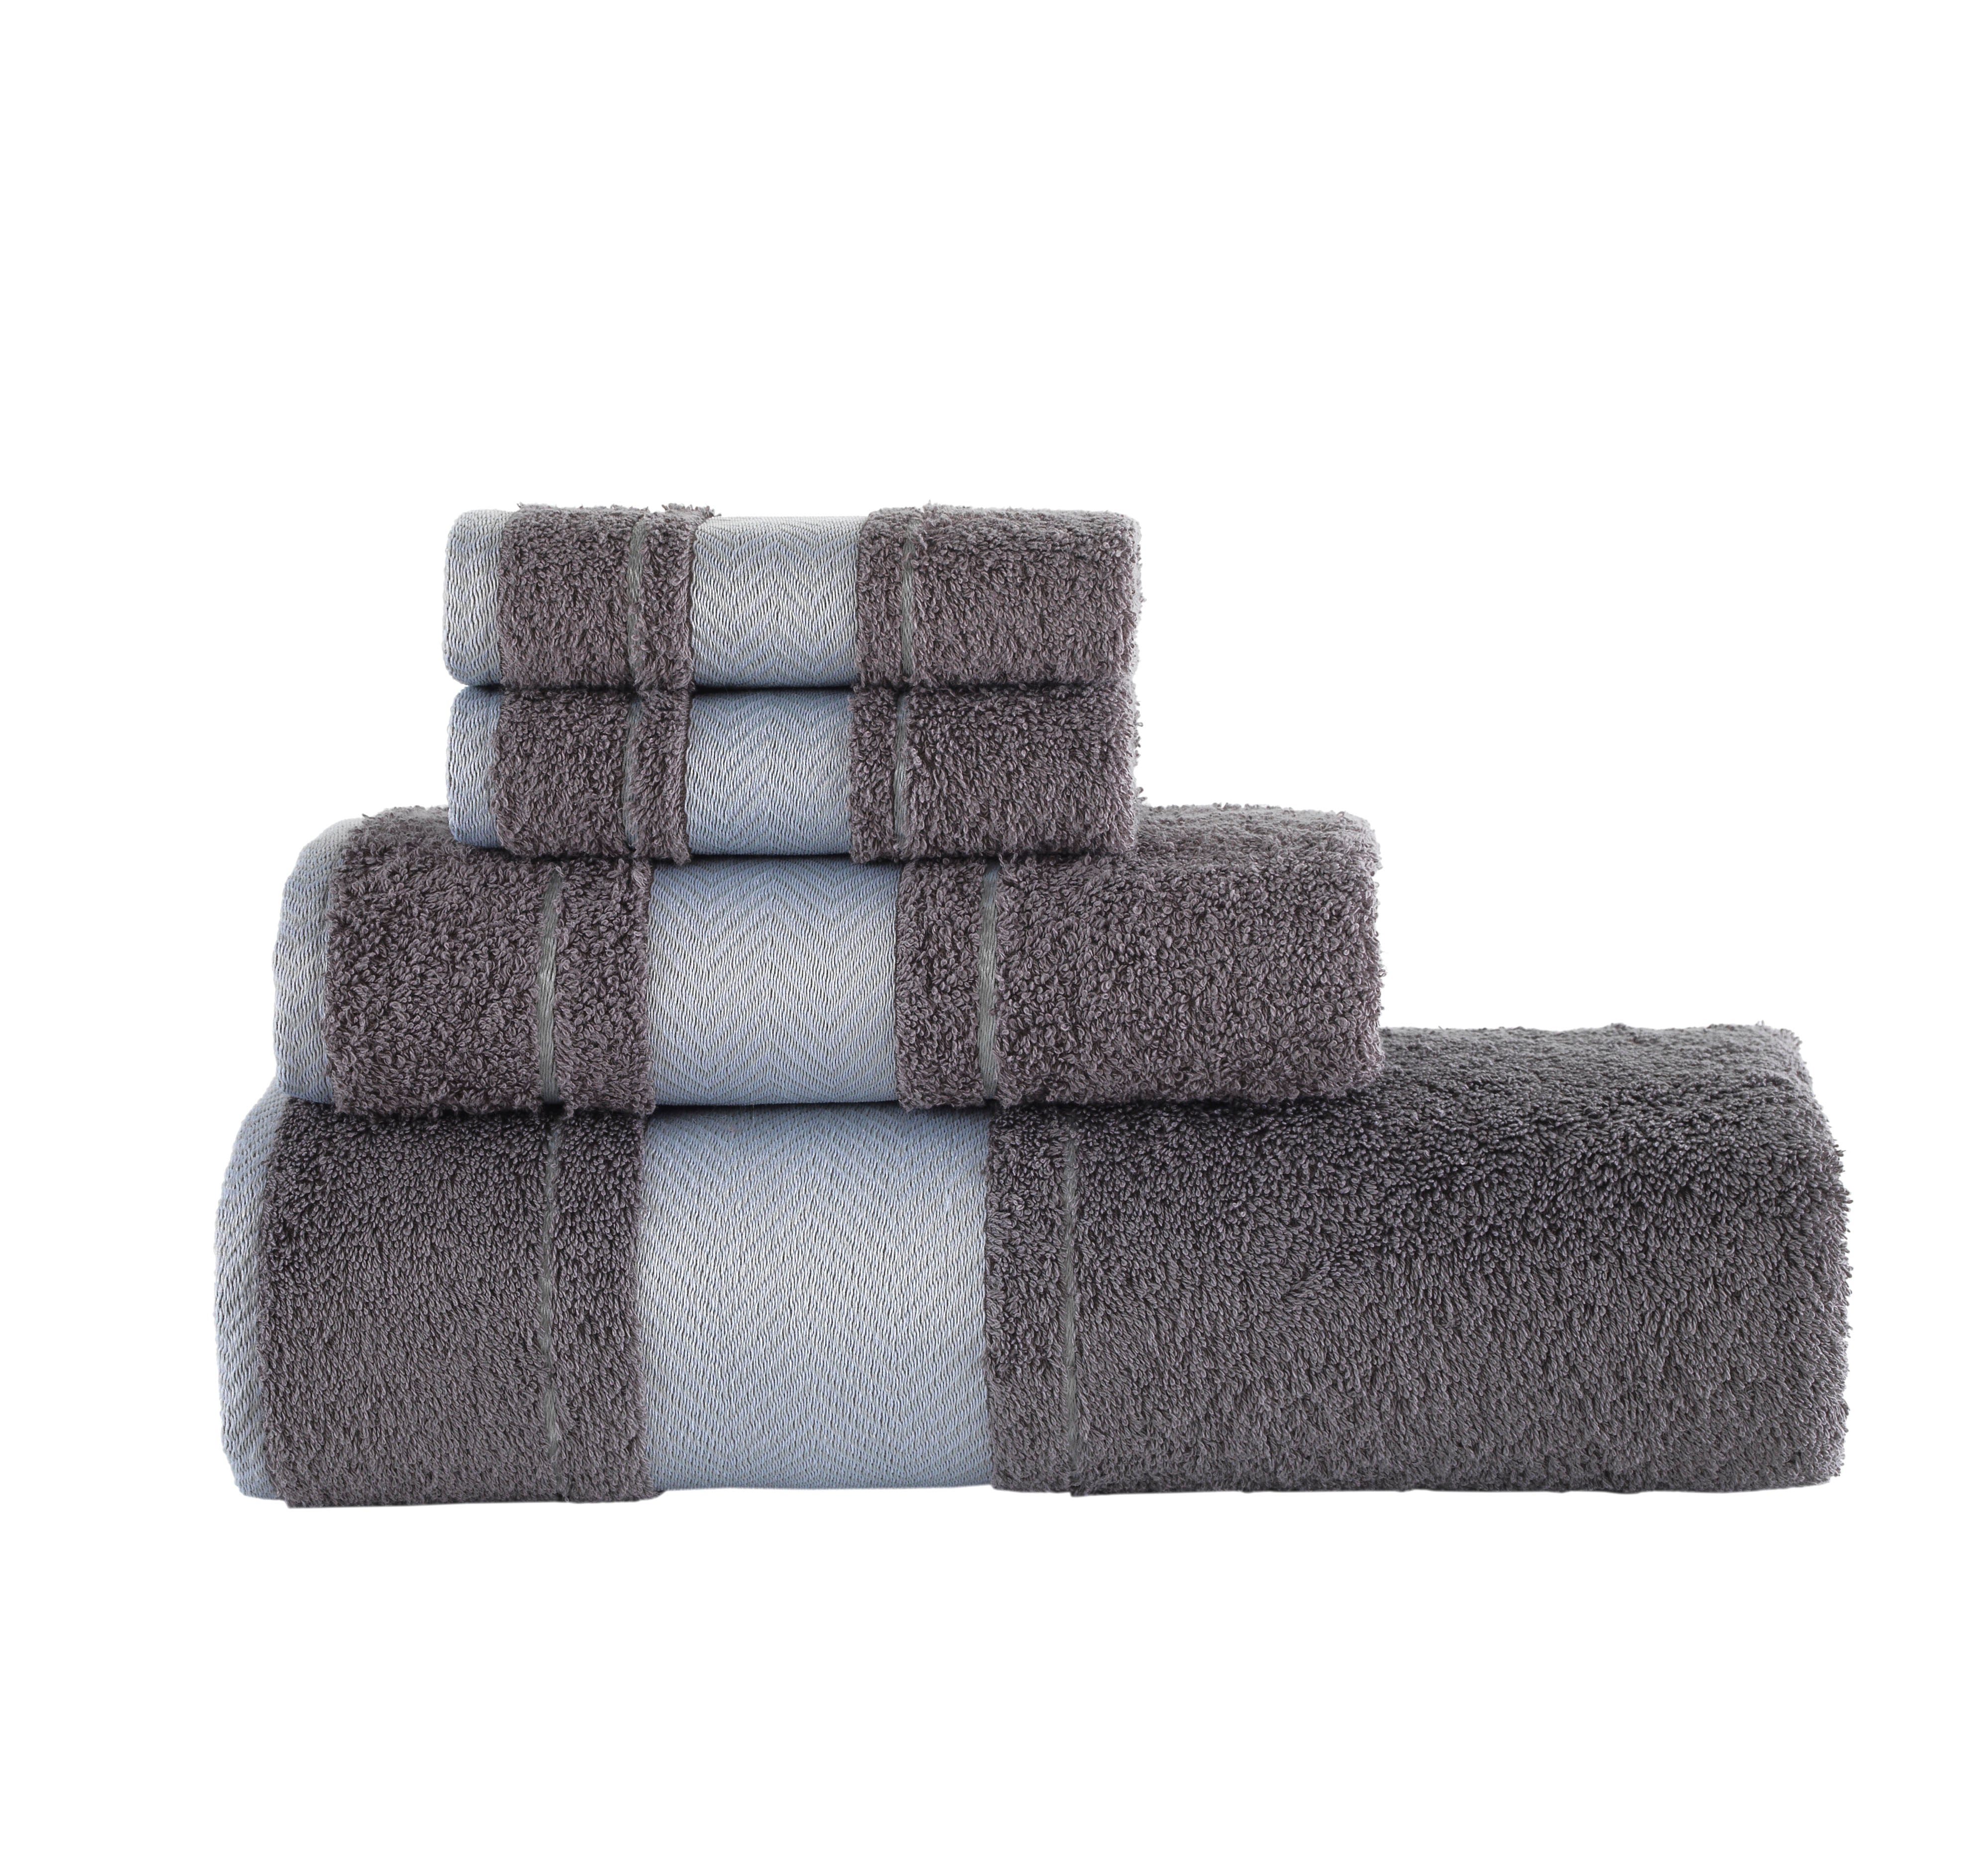 Fishbone Bath Towel, Cotton Turkish Towels - Set of 4